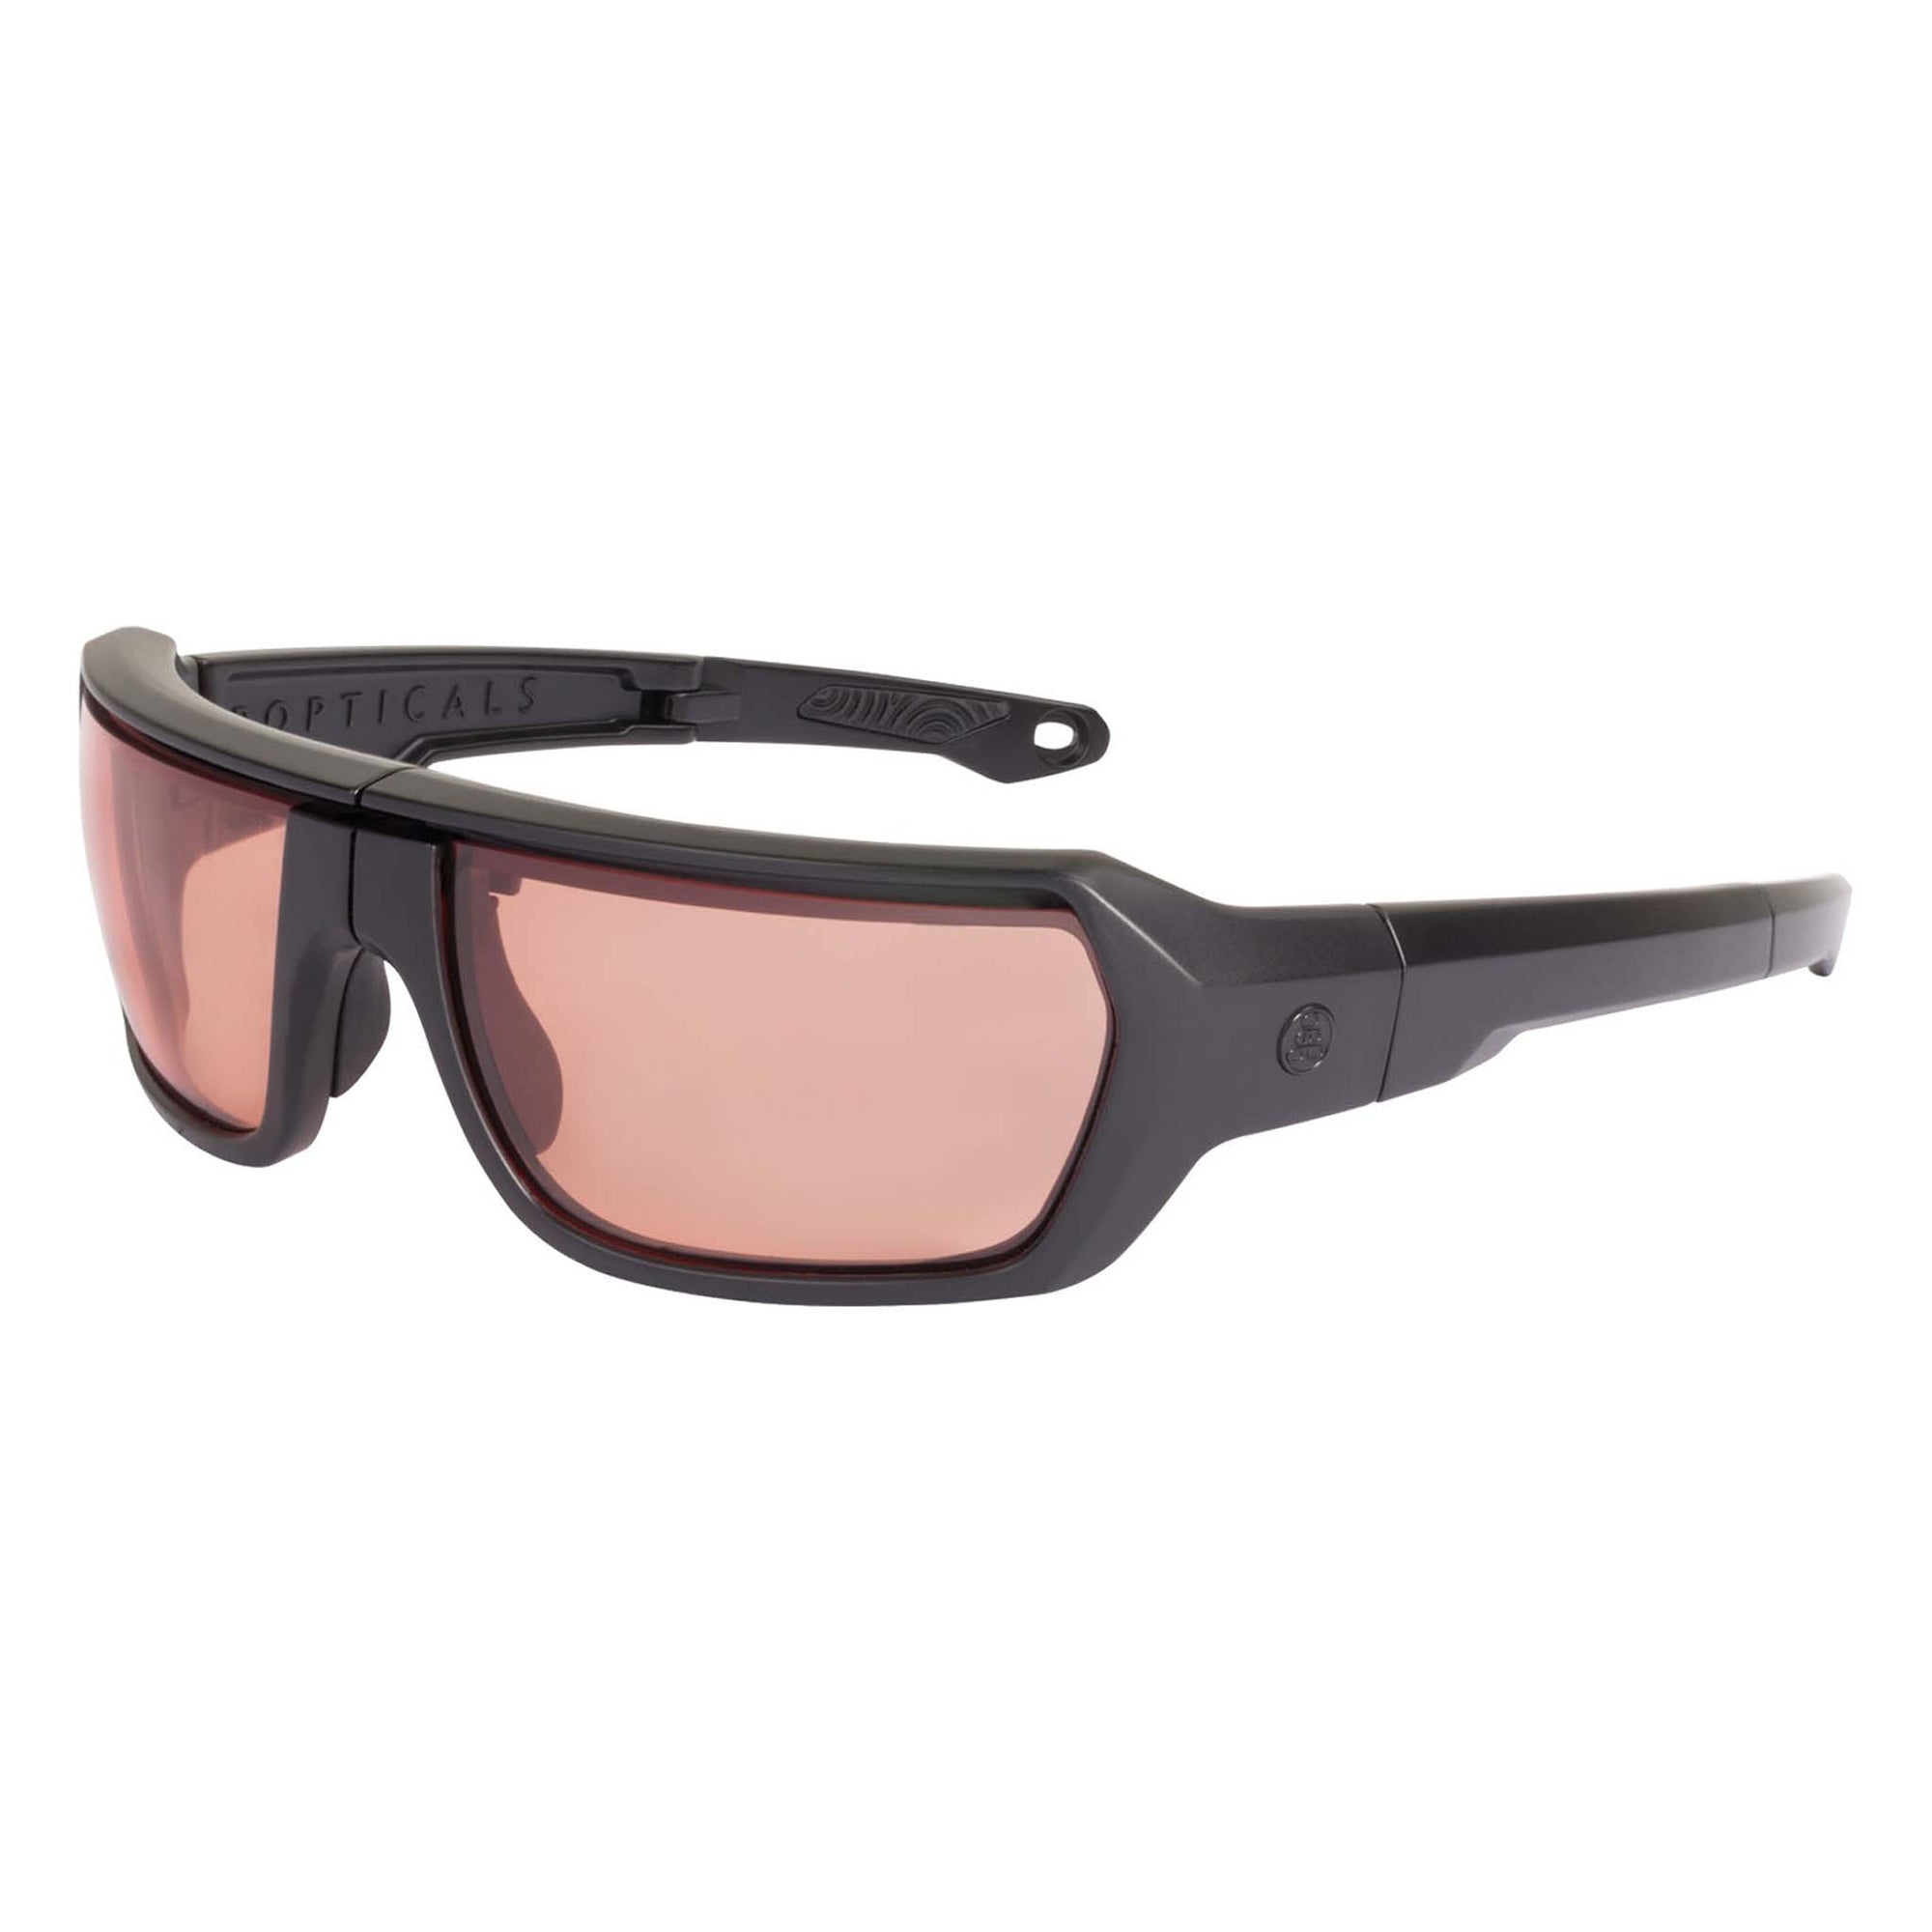 Popticals, Premium Compact Sunglasses, PopZulu, 600010-BMOZ, Standard Sunglasses, Matte Black Frame, Orange Opx Lenses, Glam View